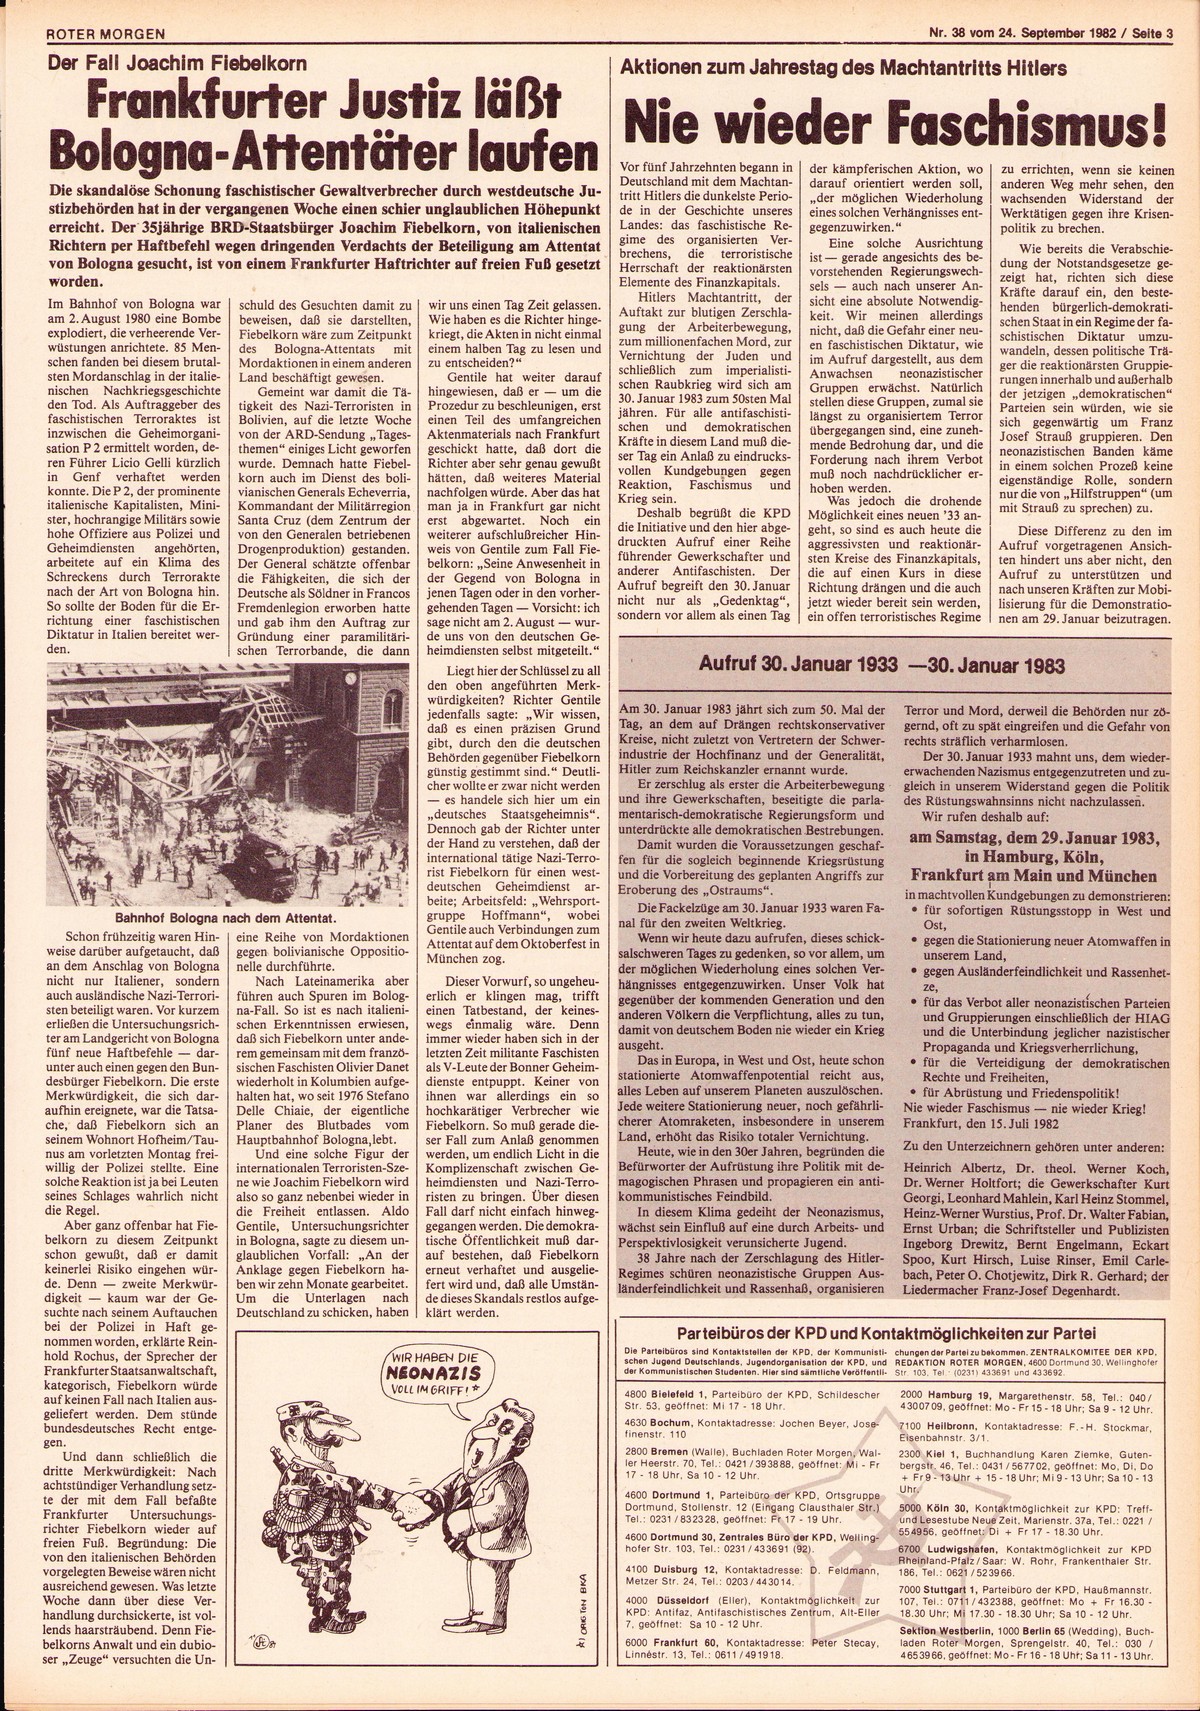 Roter Morgen, 16. Jg., 24. September 1982, Nr. 38, Seite 3